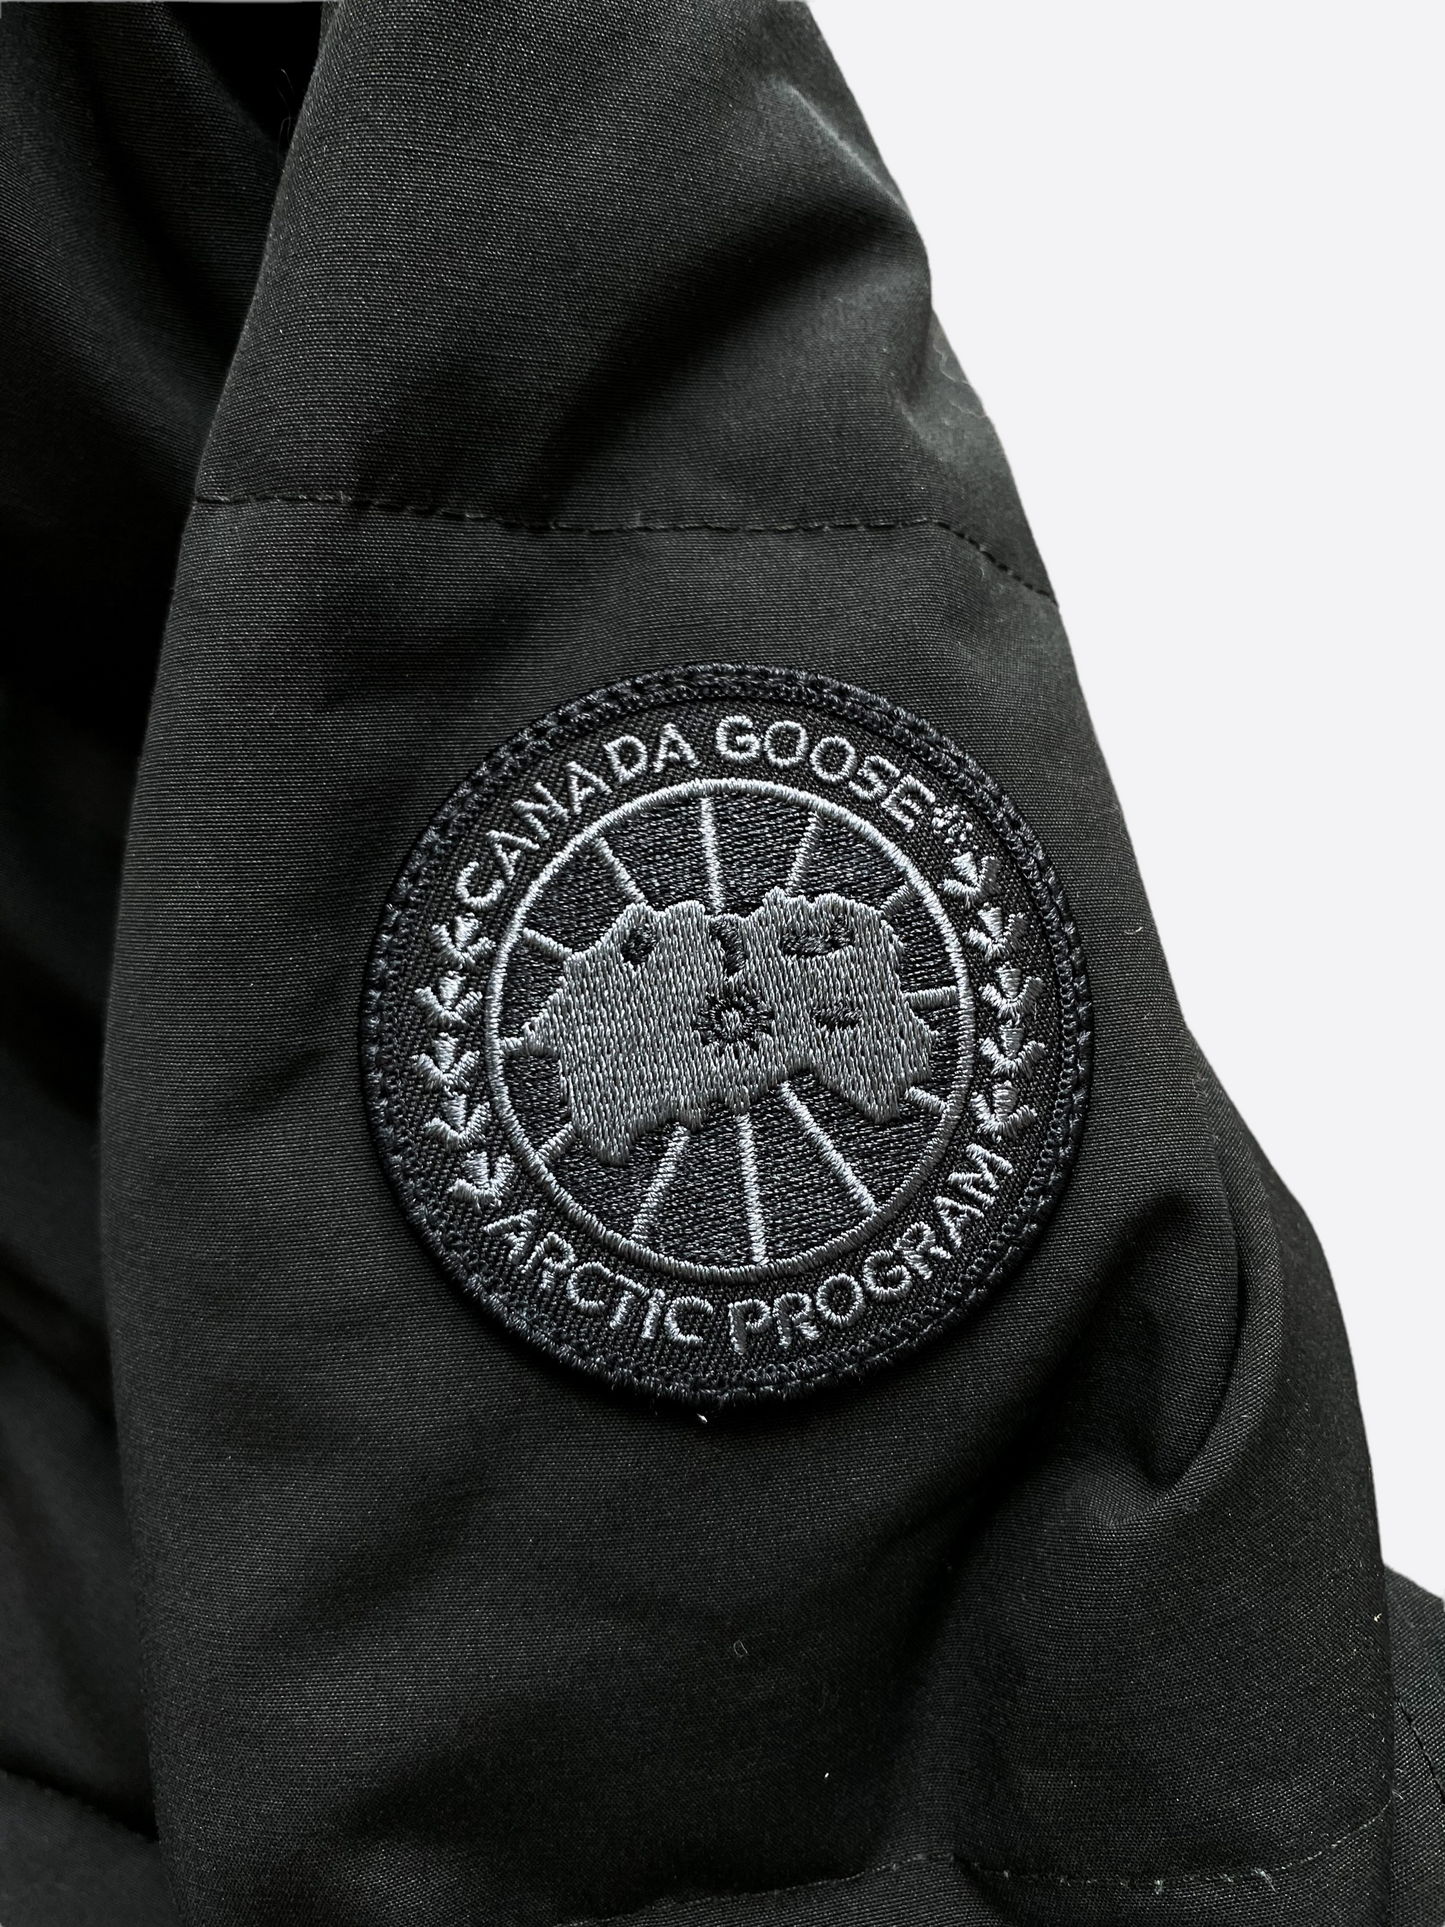 Canada Goose Black Label Wyndham Men's Jacket